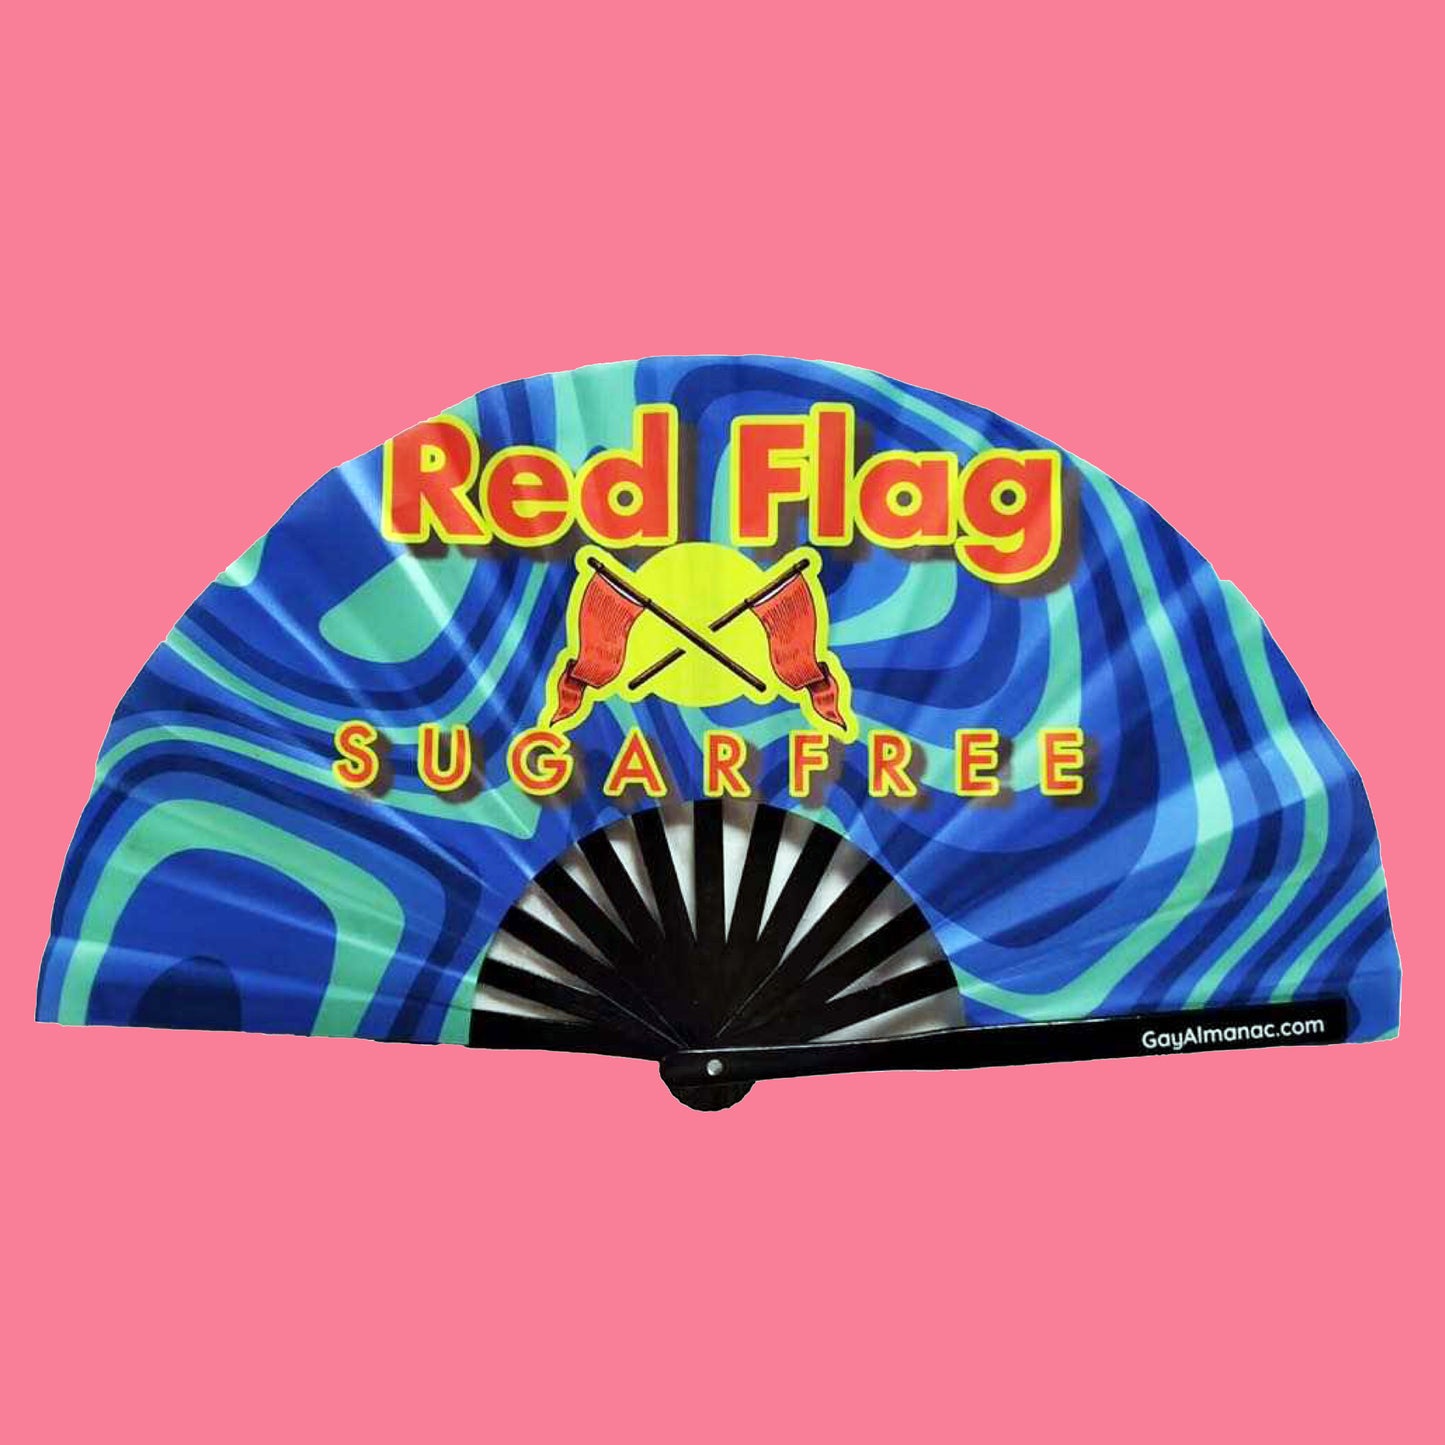 Sugarfree Red Flag Fan